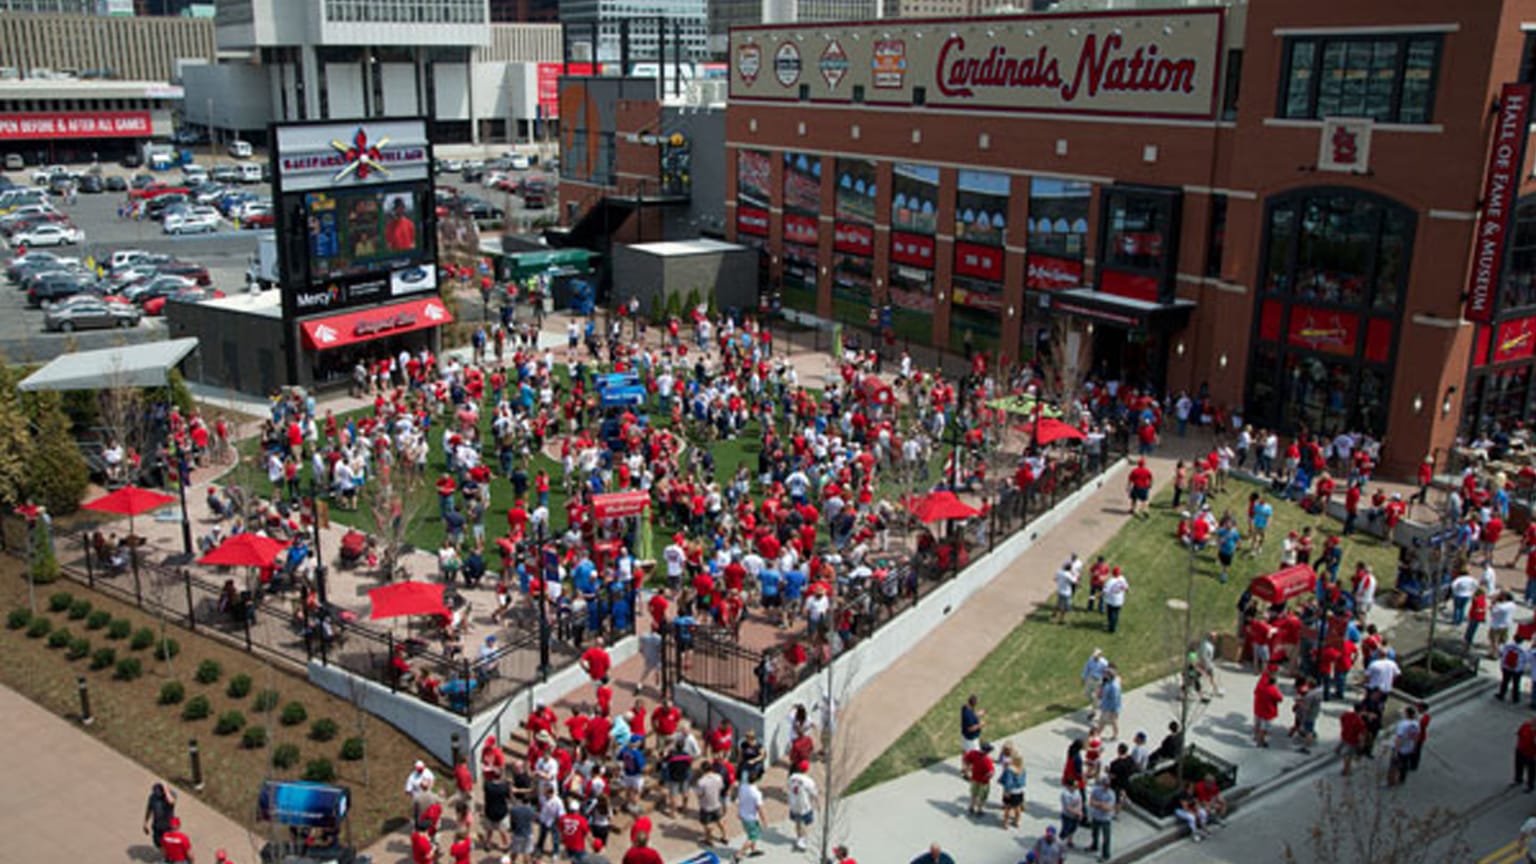 Ballpark Village St. Louis - Join us for a One Nation celebration